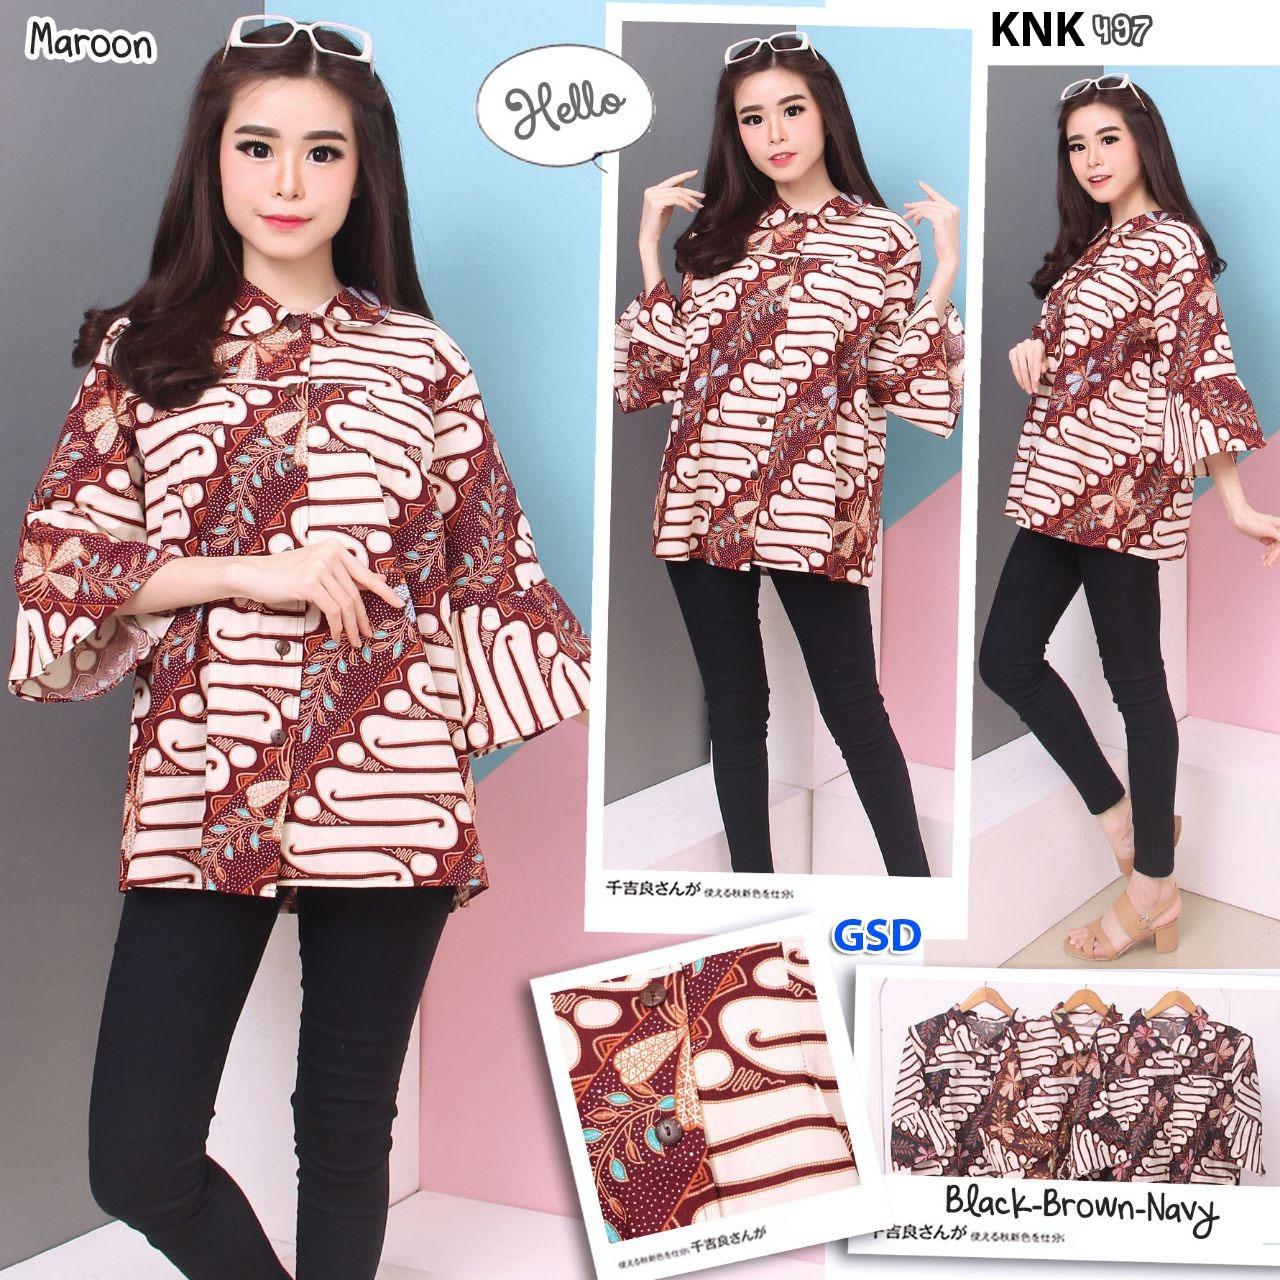 GSD - Baju Atasan Wanita/ Baju Batik / Blouse /Blus Knk 497